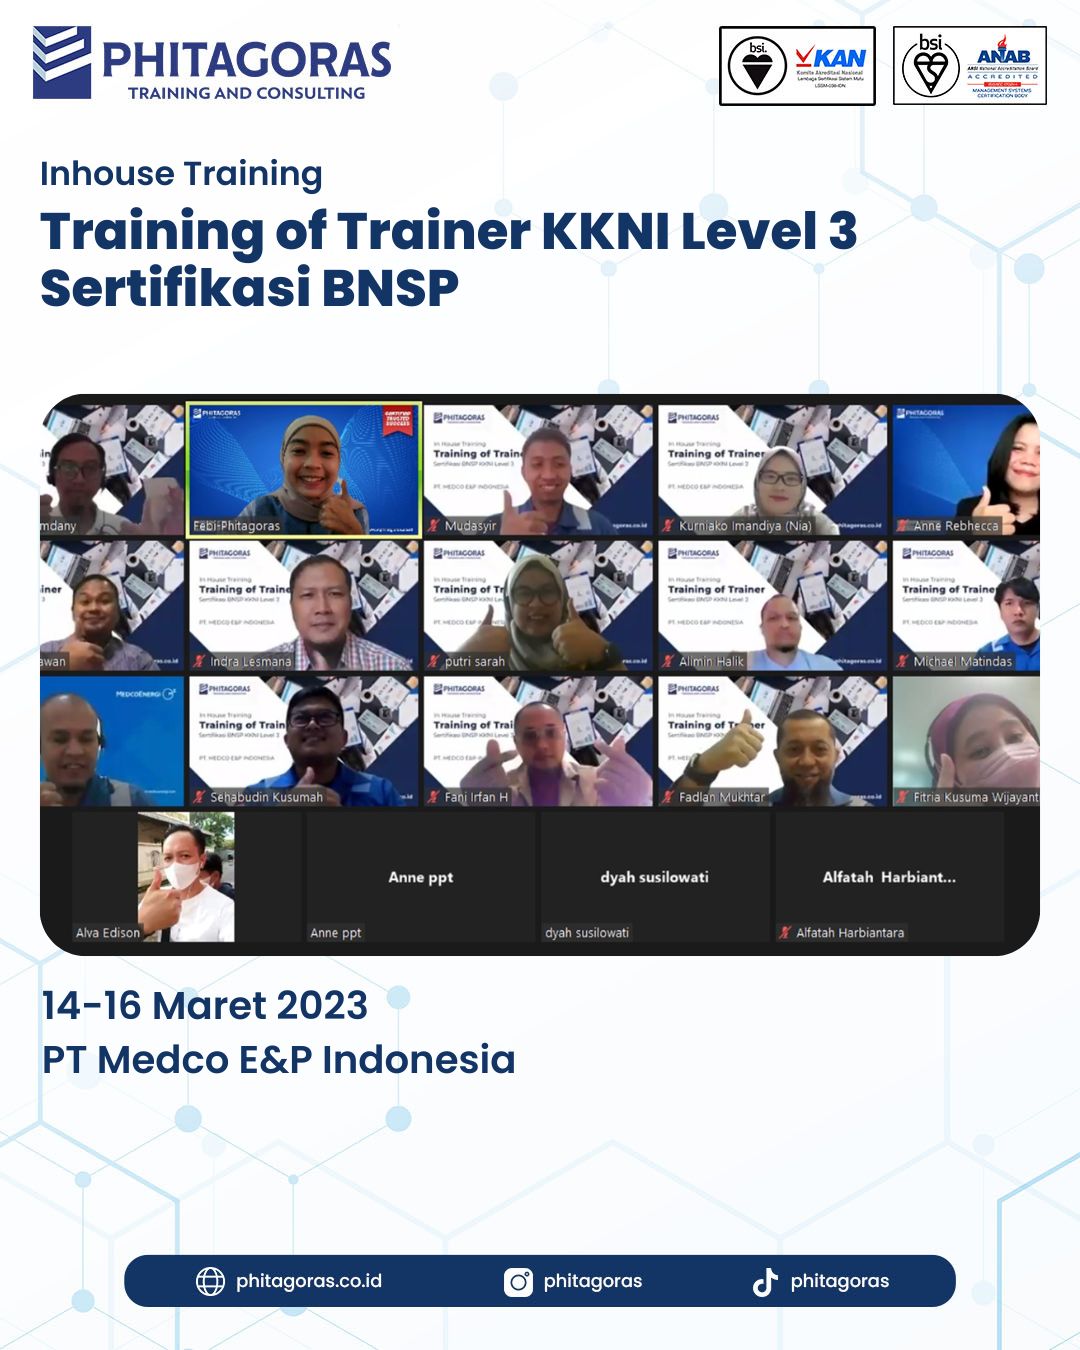 Inhouse Training Training of Trainer KKNI Level 3 Sertifikasi BNSP - PT Medco E&P Indonesia